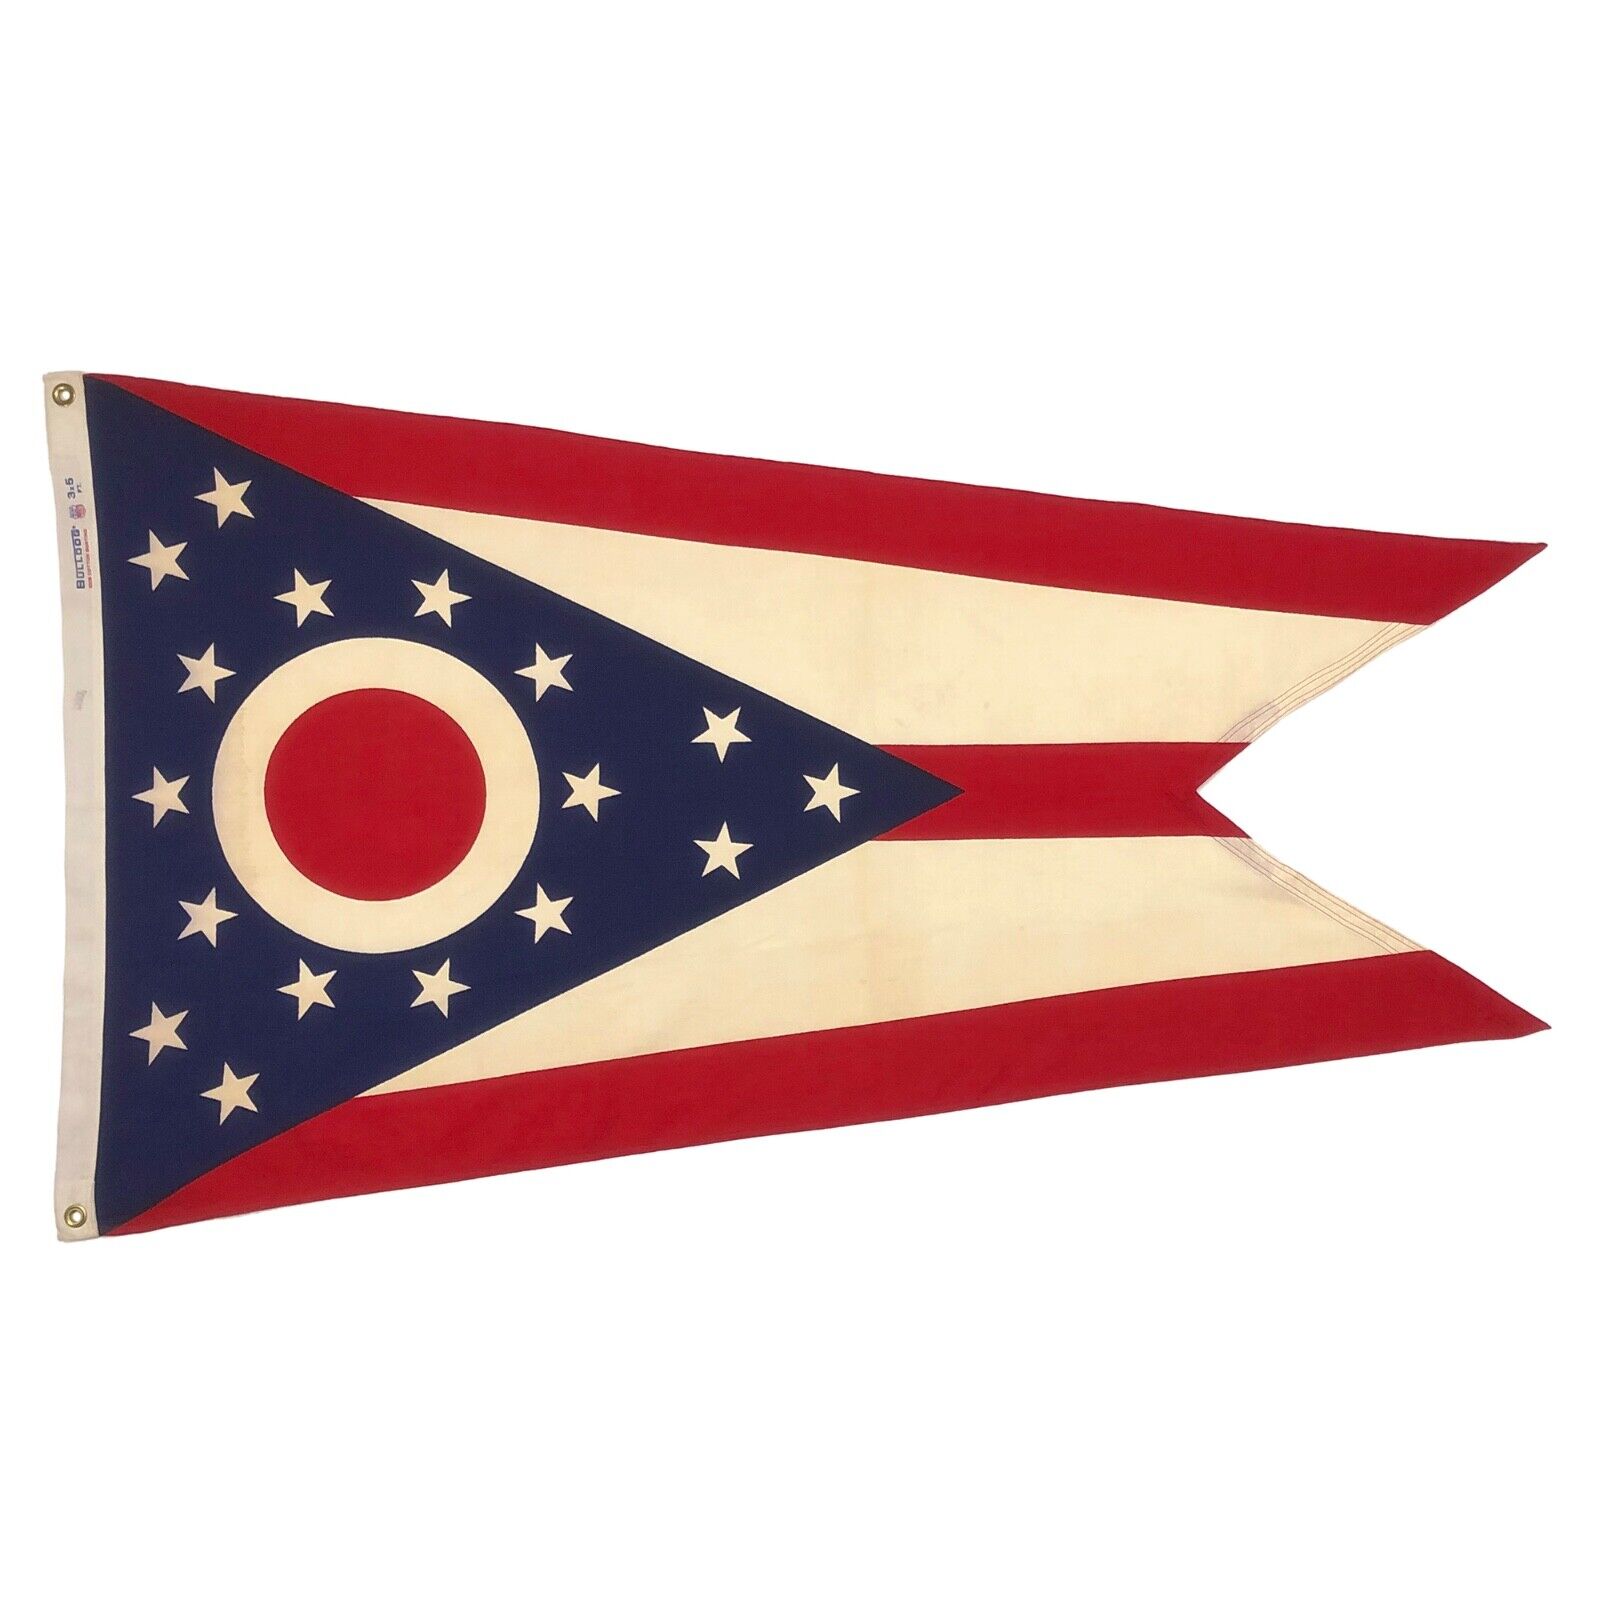 Vintage Cotton Ohio State Flag Old Cloth American Textile Art Decor Buckeye USA